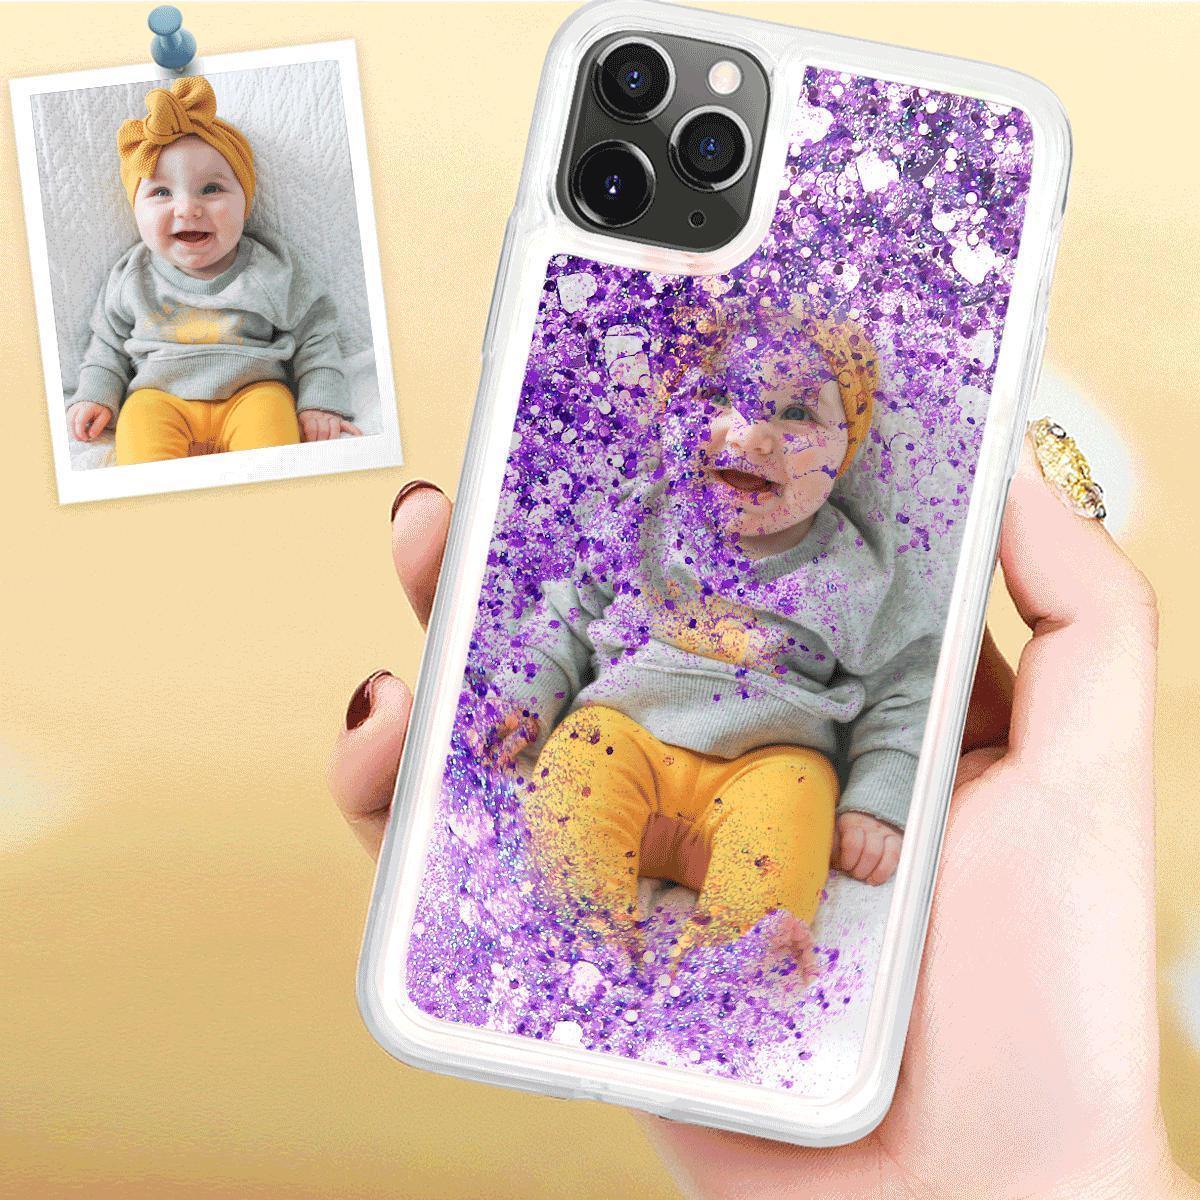 iPhone 5/Se Custom Quicksand Photo Protective Phone Case Soft Shell - Purple - soufeelus